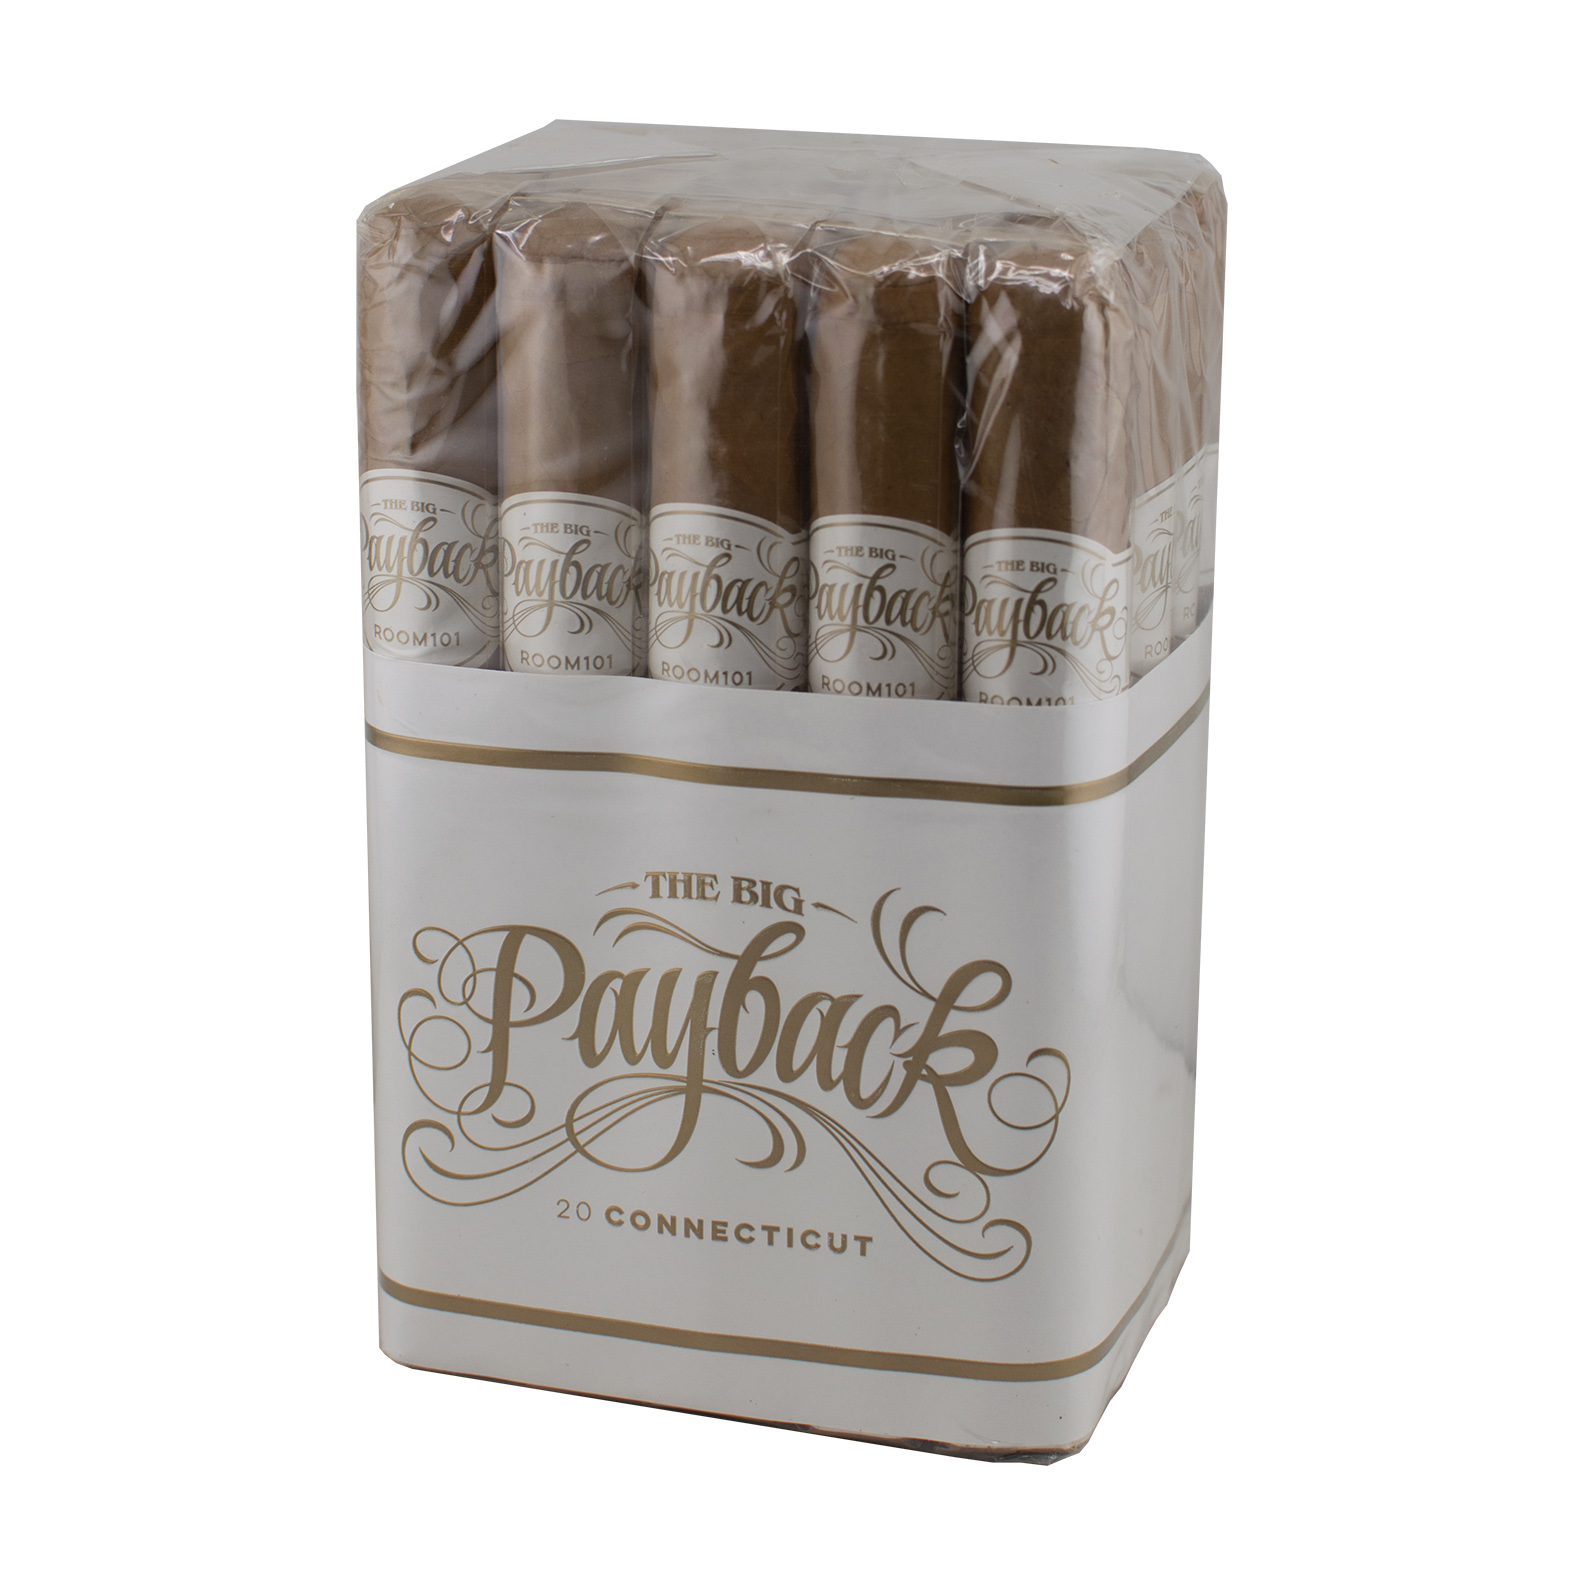 Room 101 Payback Connecticut Toro Cigar - Bundle of 20